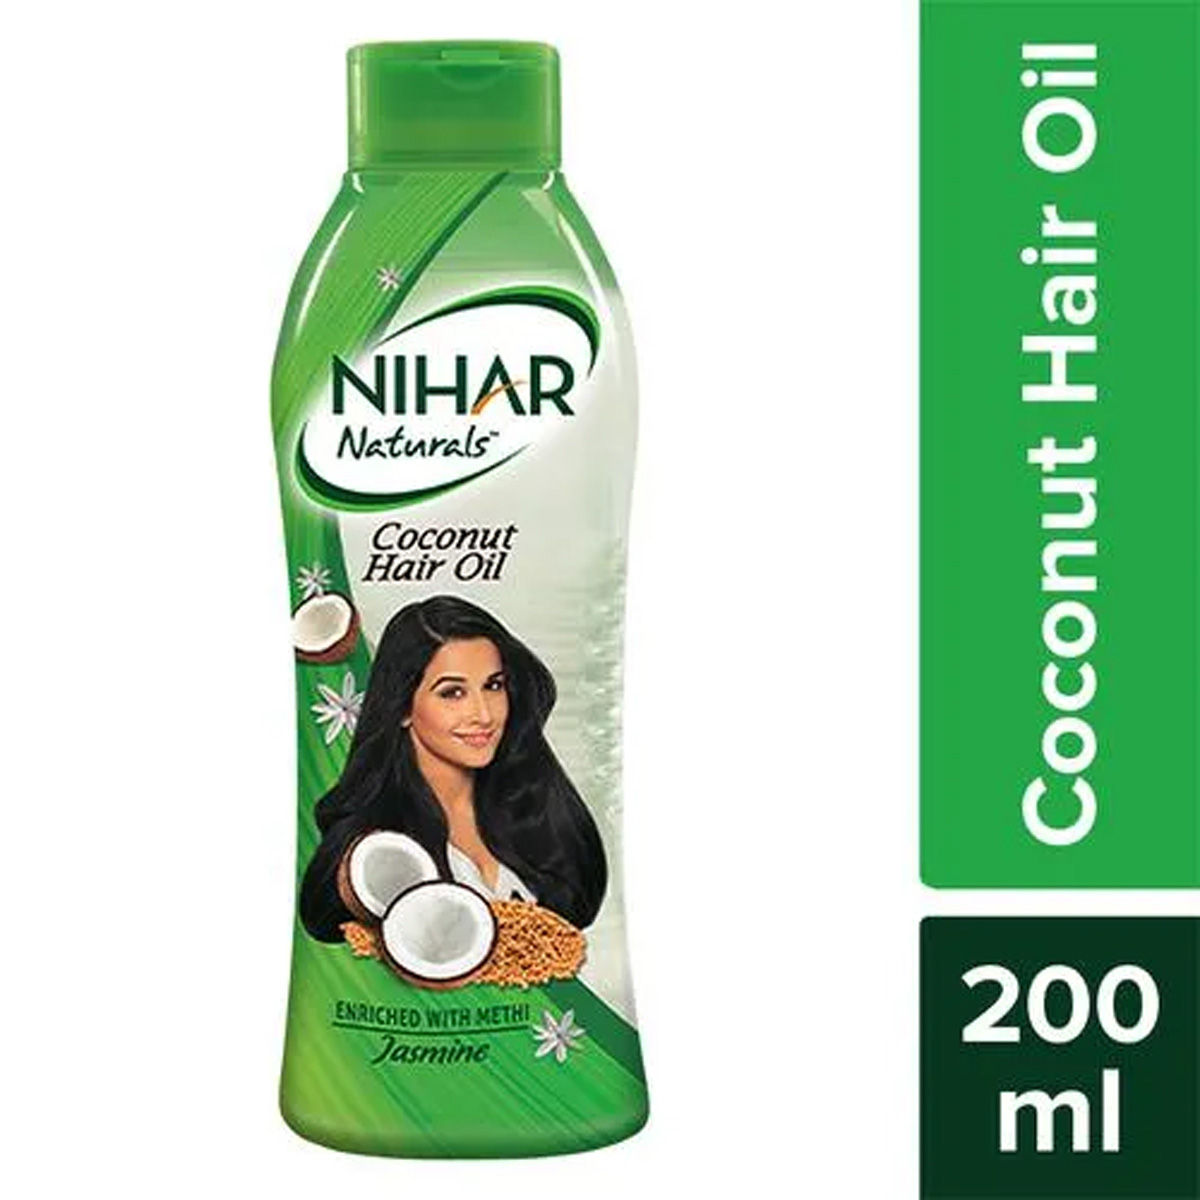 Buy Nihar Naturals Jasmine Coconut Hair Oil, 200 ml Online